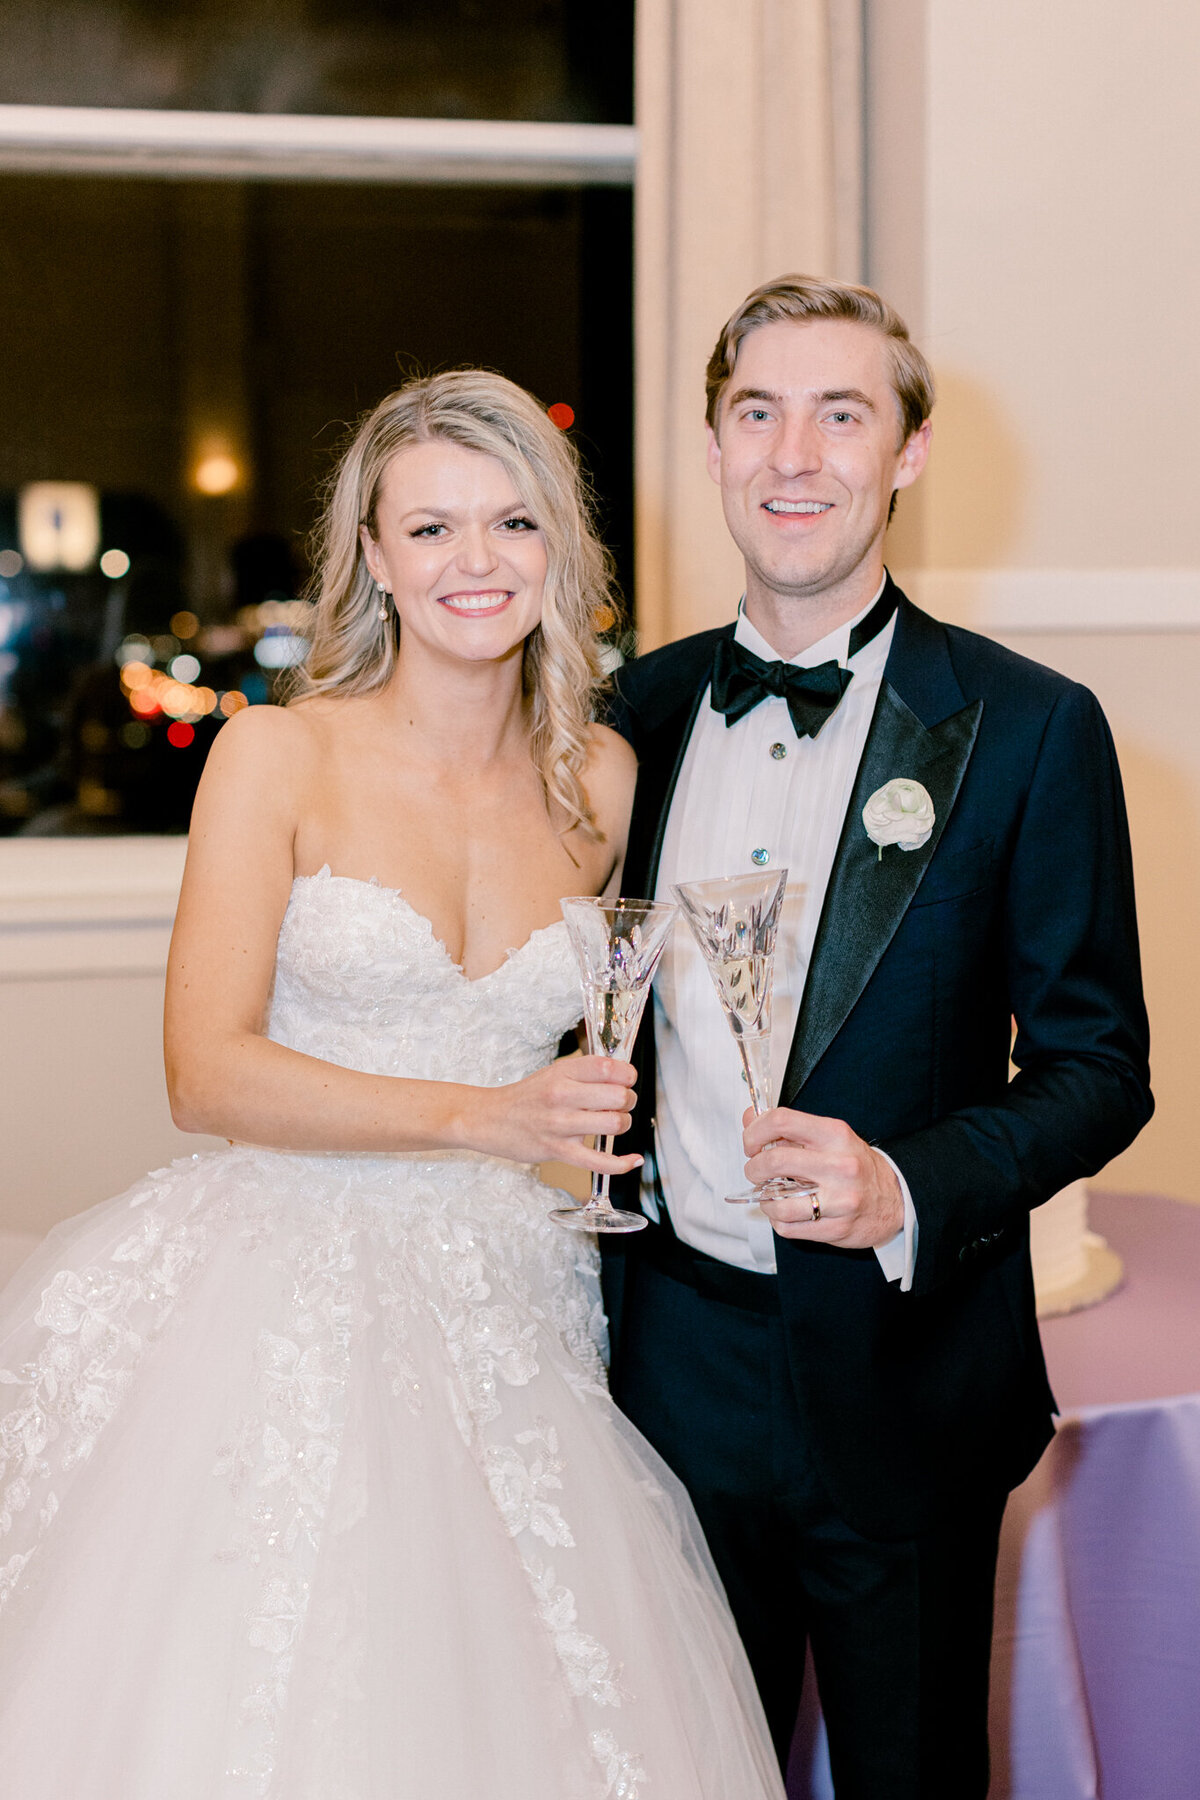 Shelby & Thomas's Wedding at HPUMC The Room on Main | Dallas Wedding Photographer | Sami Kathryn Photography-207